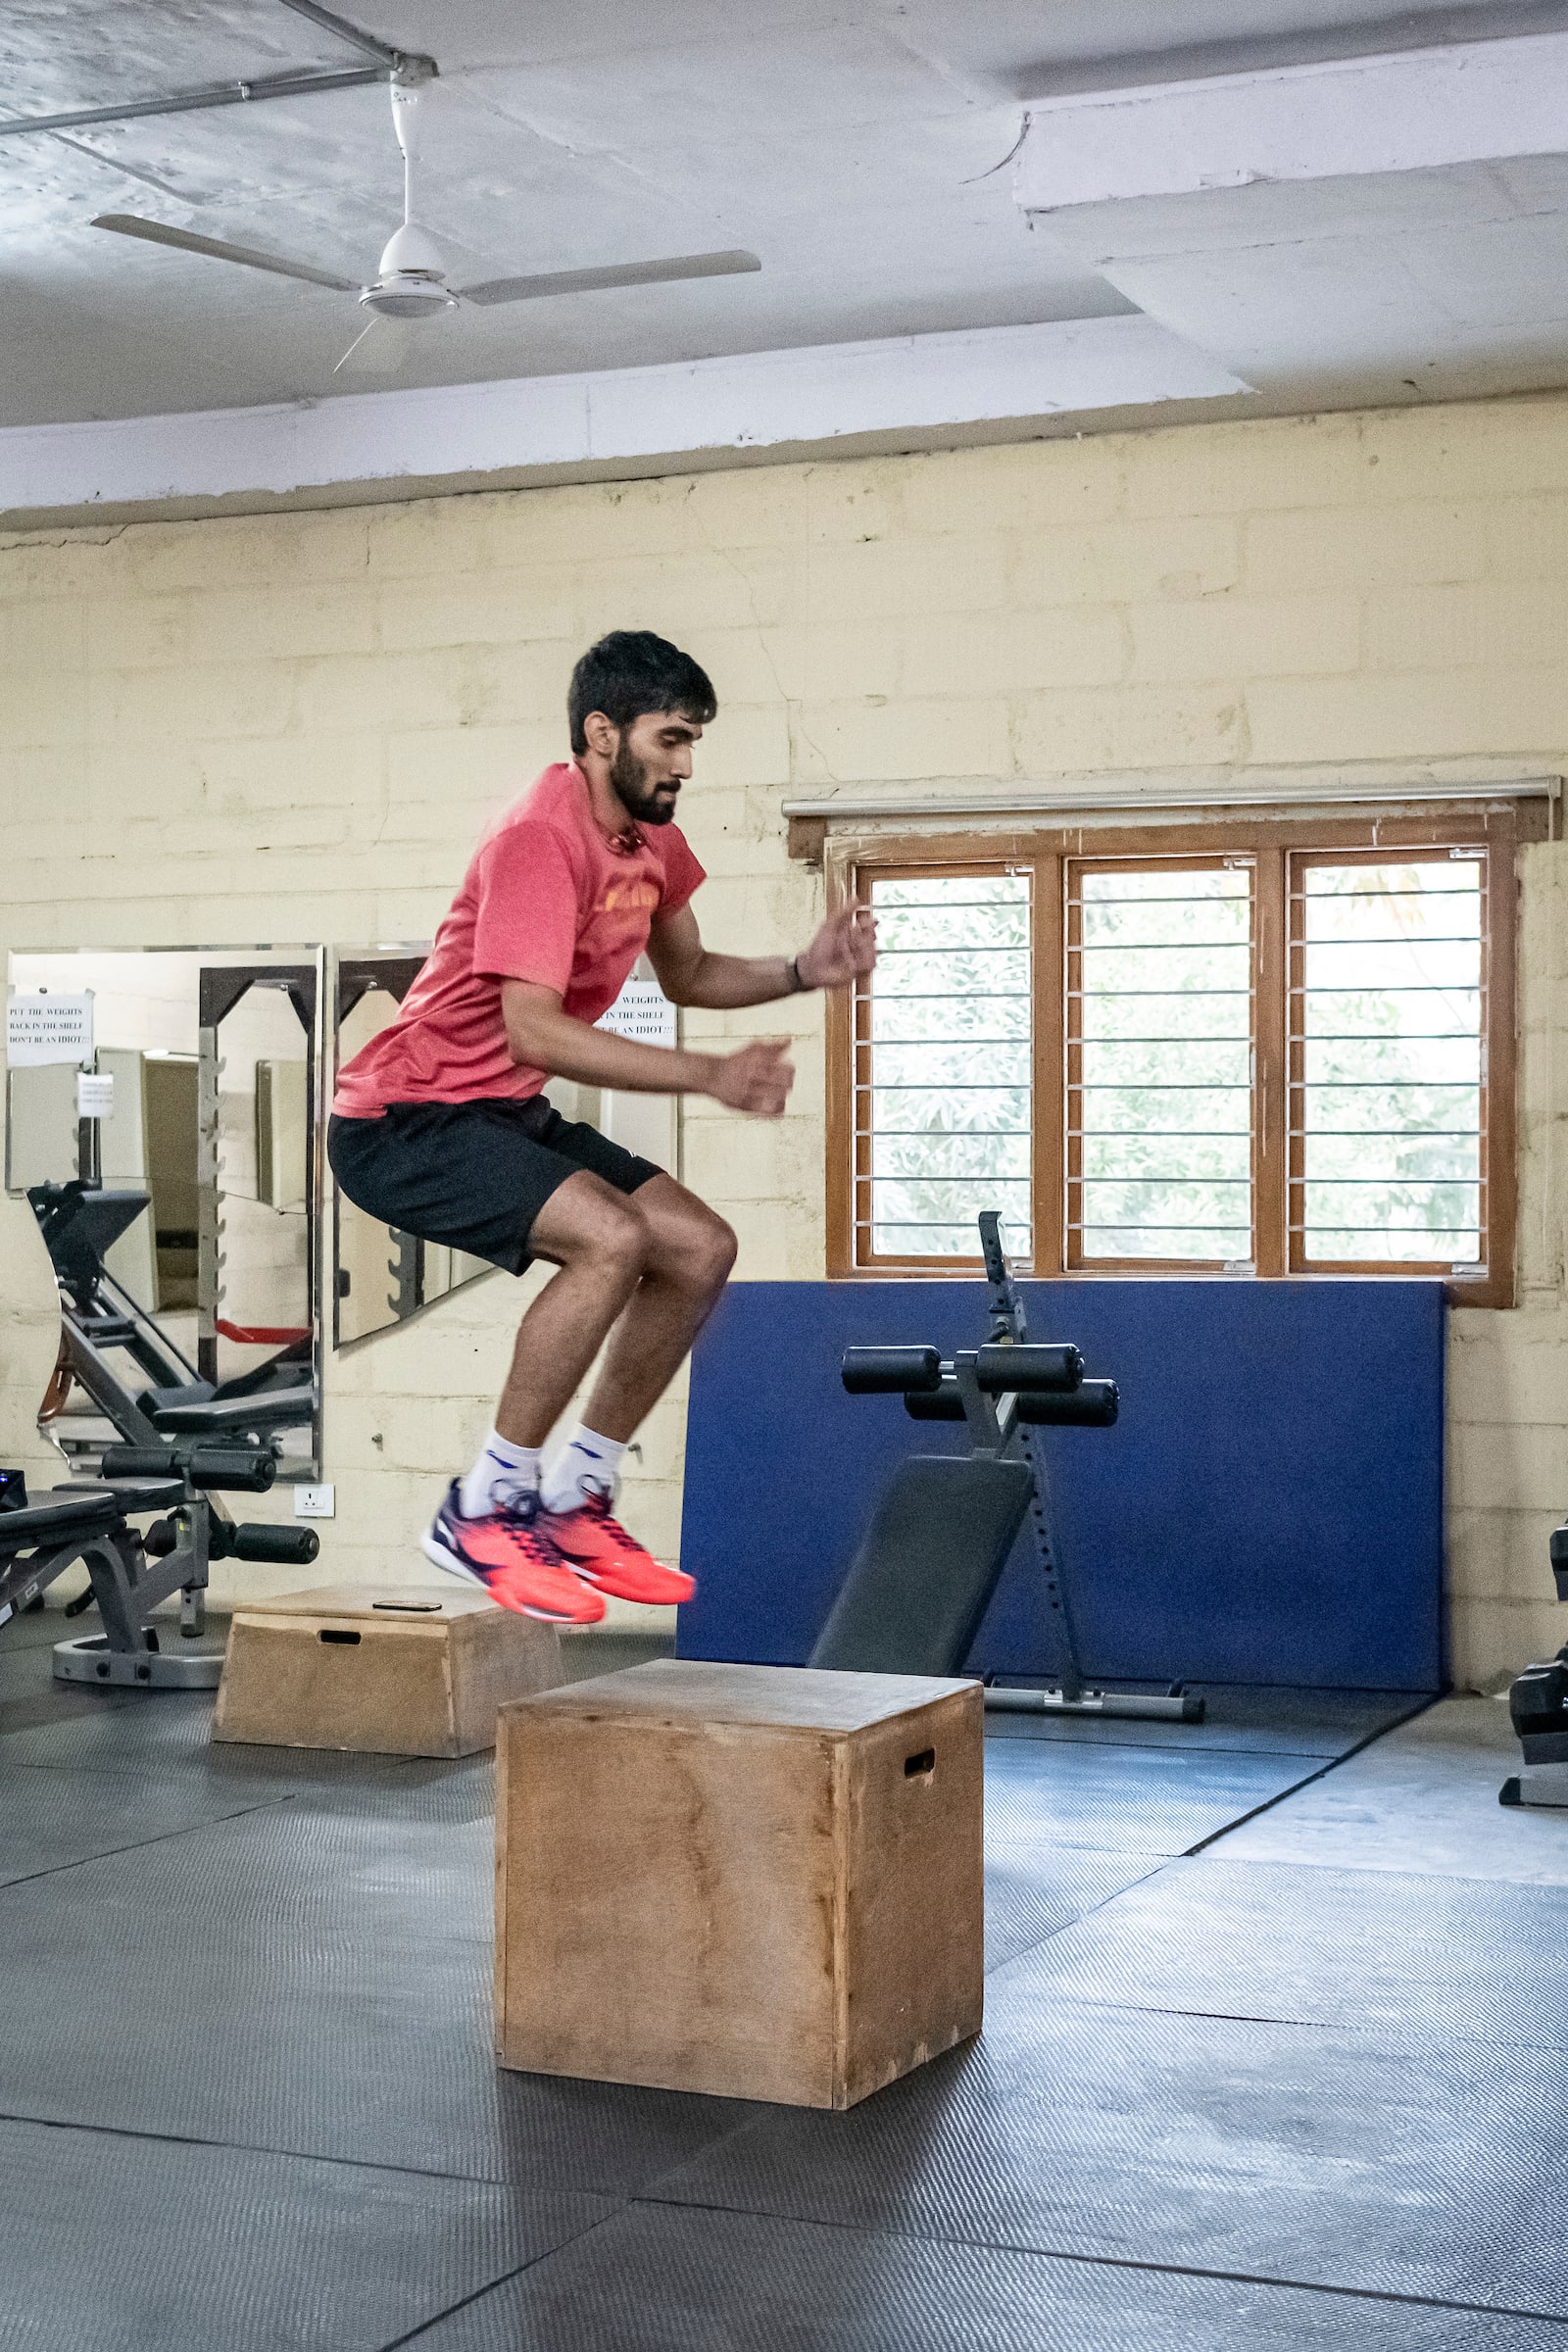 Moske Vedligeholdelse analyse Badminton home workout: 5 exercises by Srikanth Kidambi